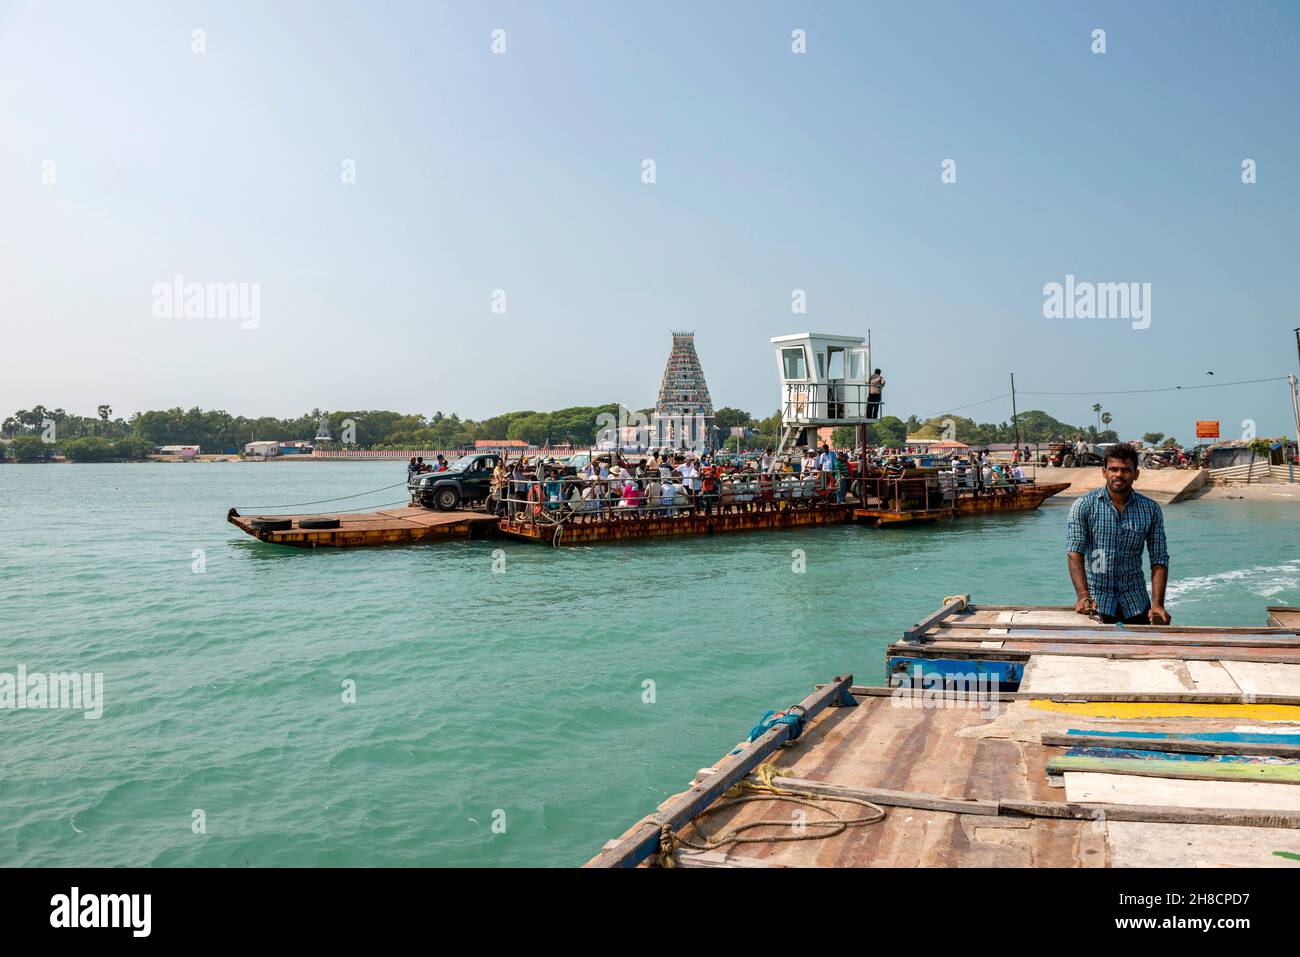 Sri Lanka, Northern Province, Province du Nord, Nördliche Provinz, Nainativu Island, bateau avec pèlerin, Boot mit Pilger, boat with pilgrim Stock Photo